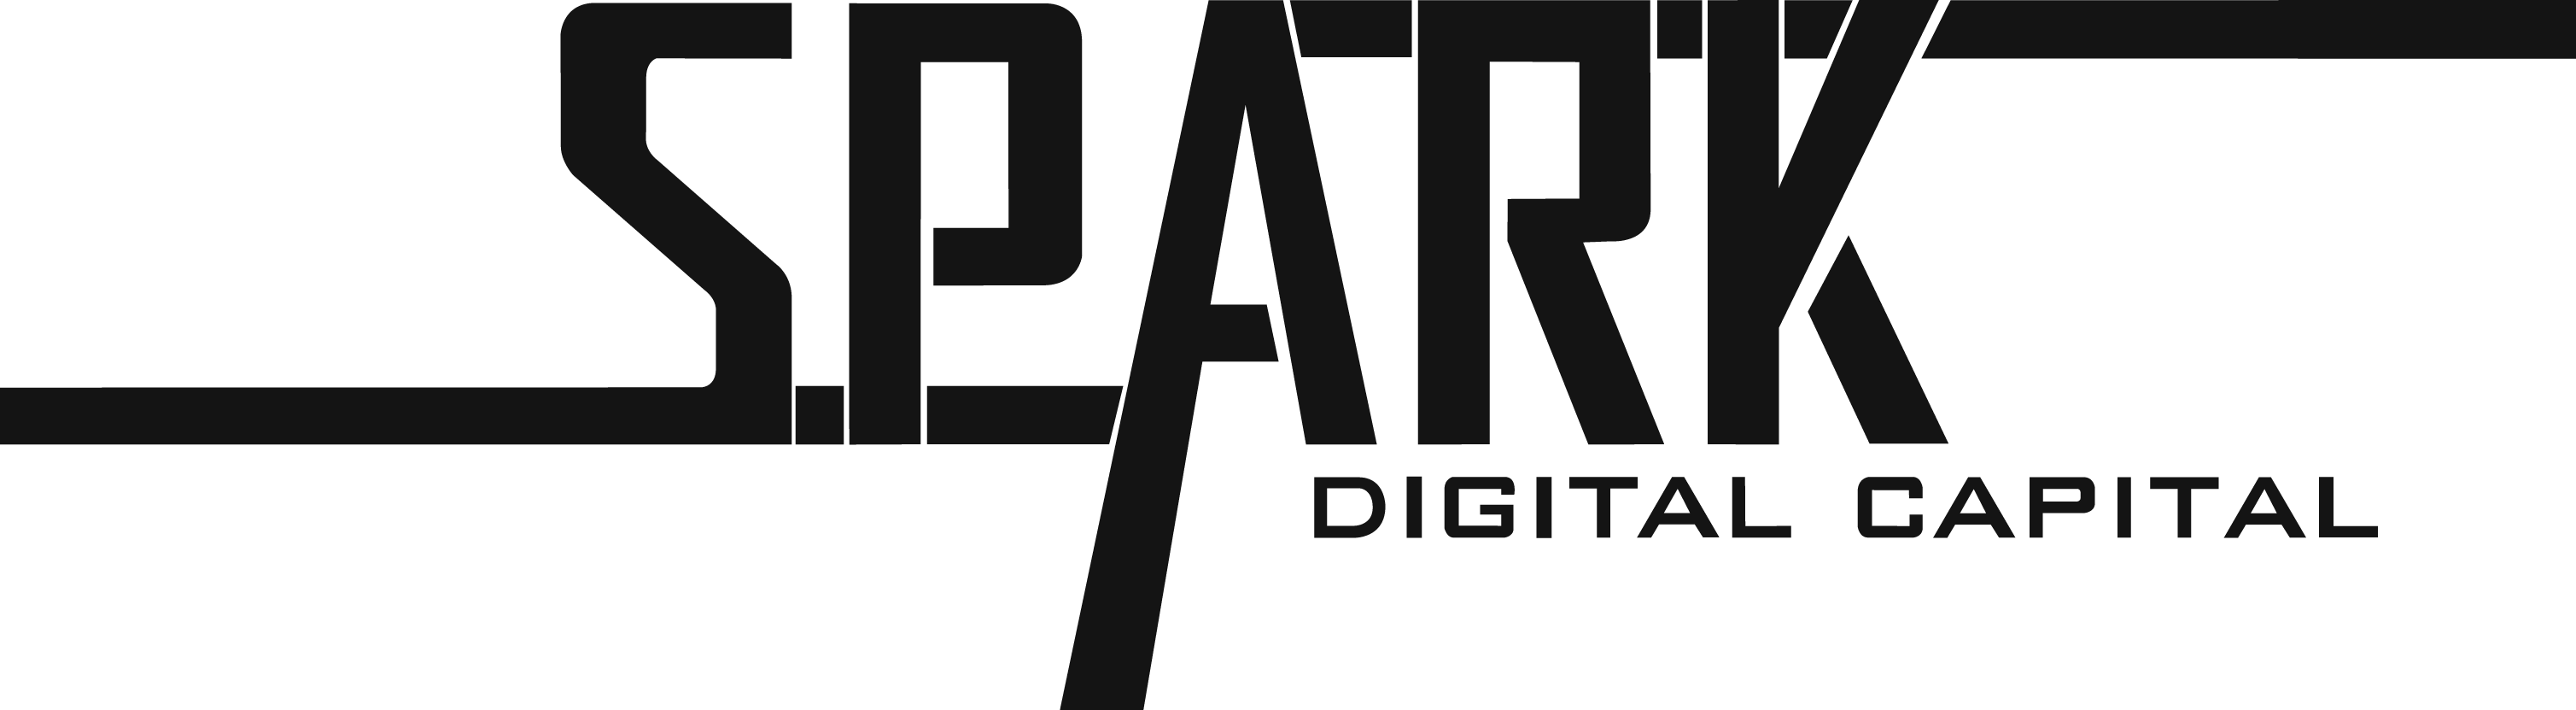 sparK logo image